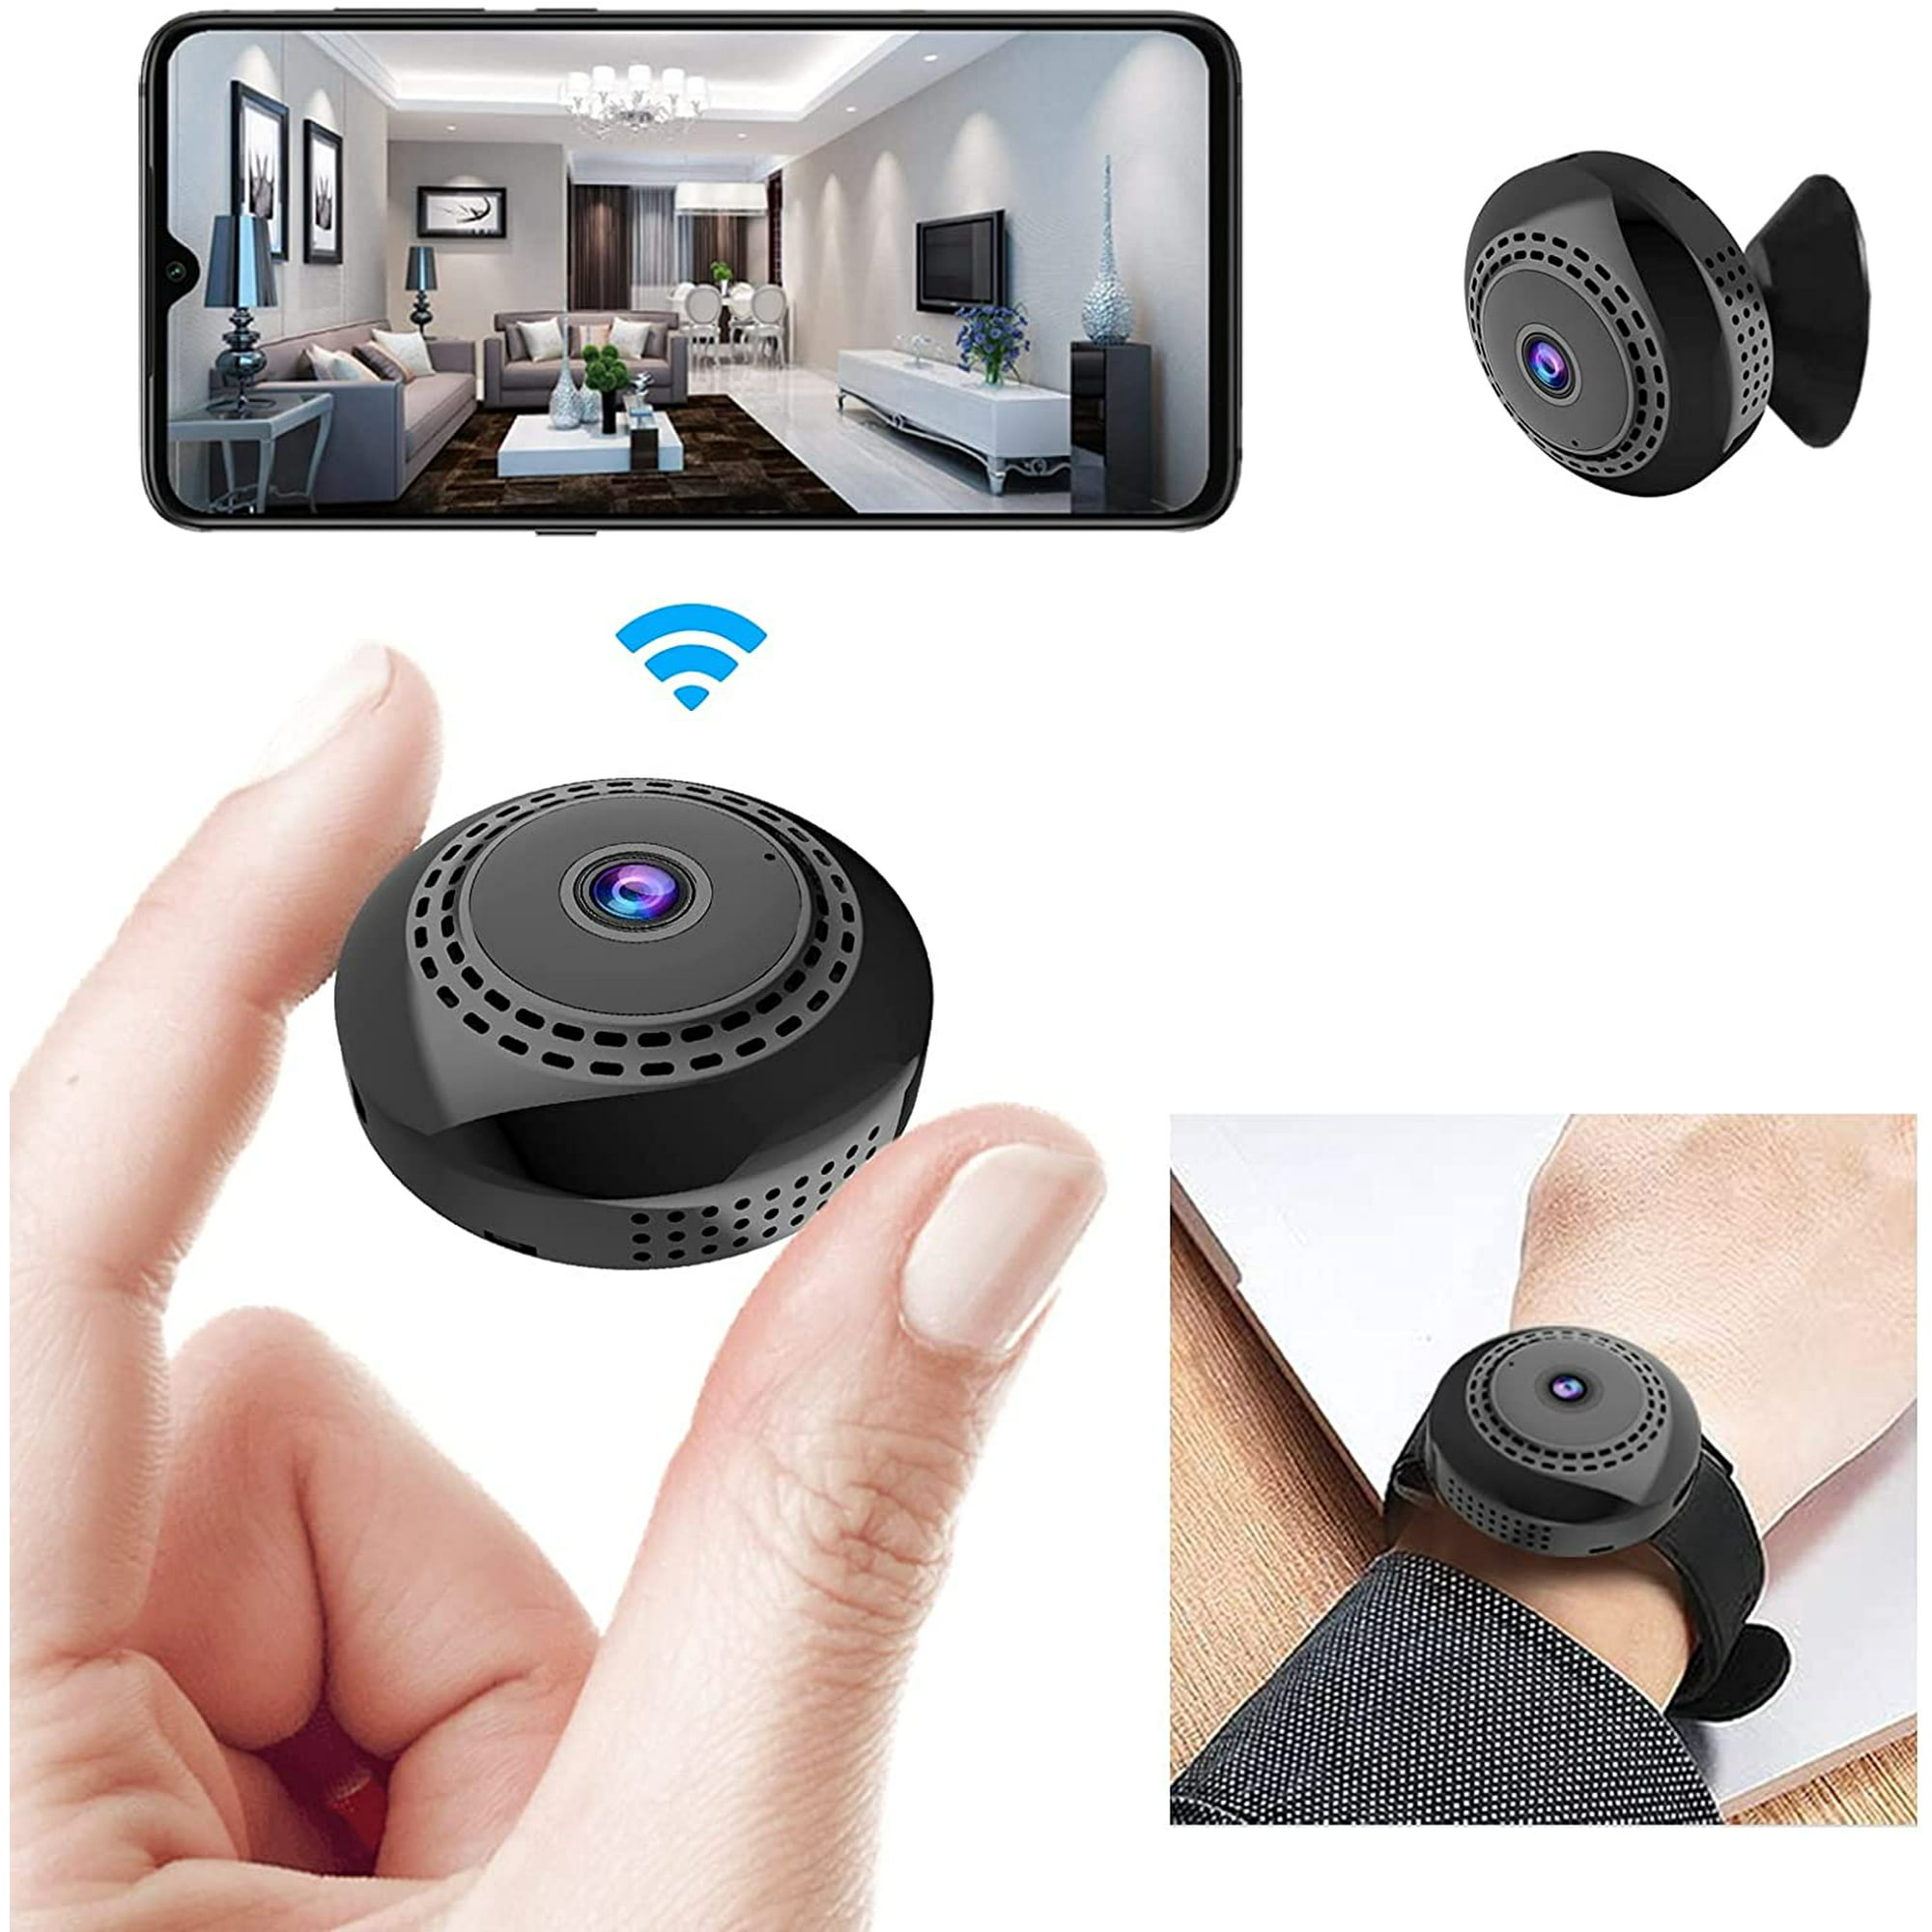  Mini cámara espía WiFi cámara oculta con audio Live Feed Cámara  de vigilancia de seguridad para el hogar 1080P Cámara oculta niñera  inalámbrica con aplicación de teléfono celular Visión nocturna Detección